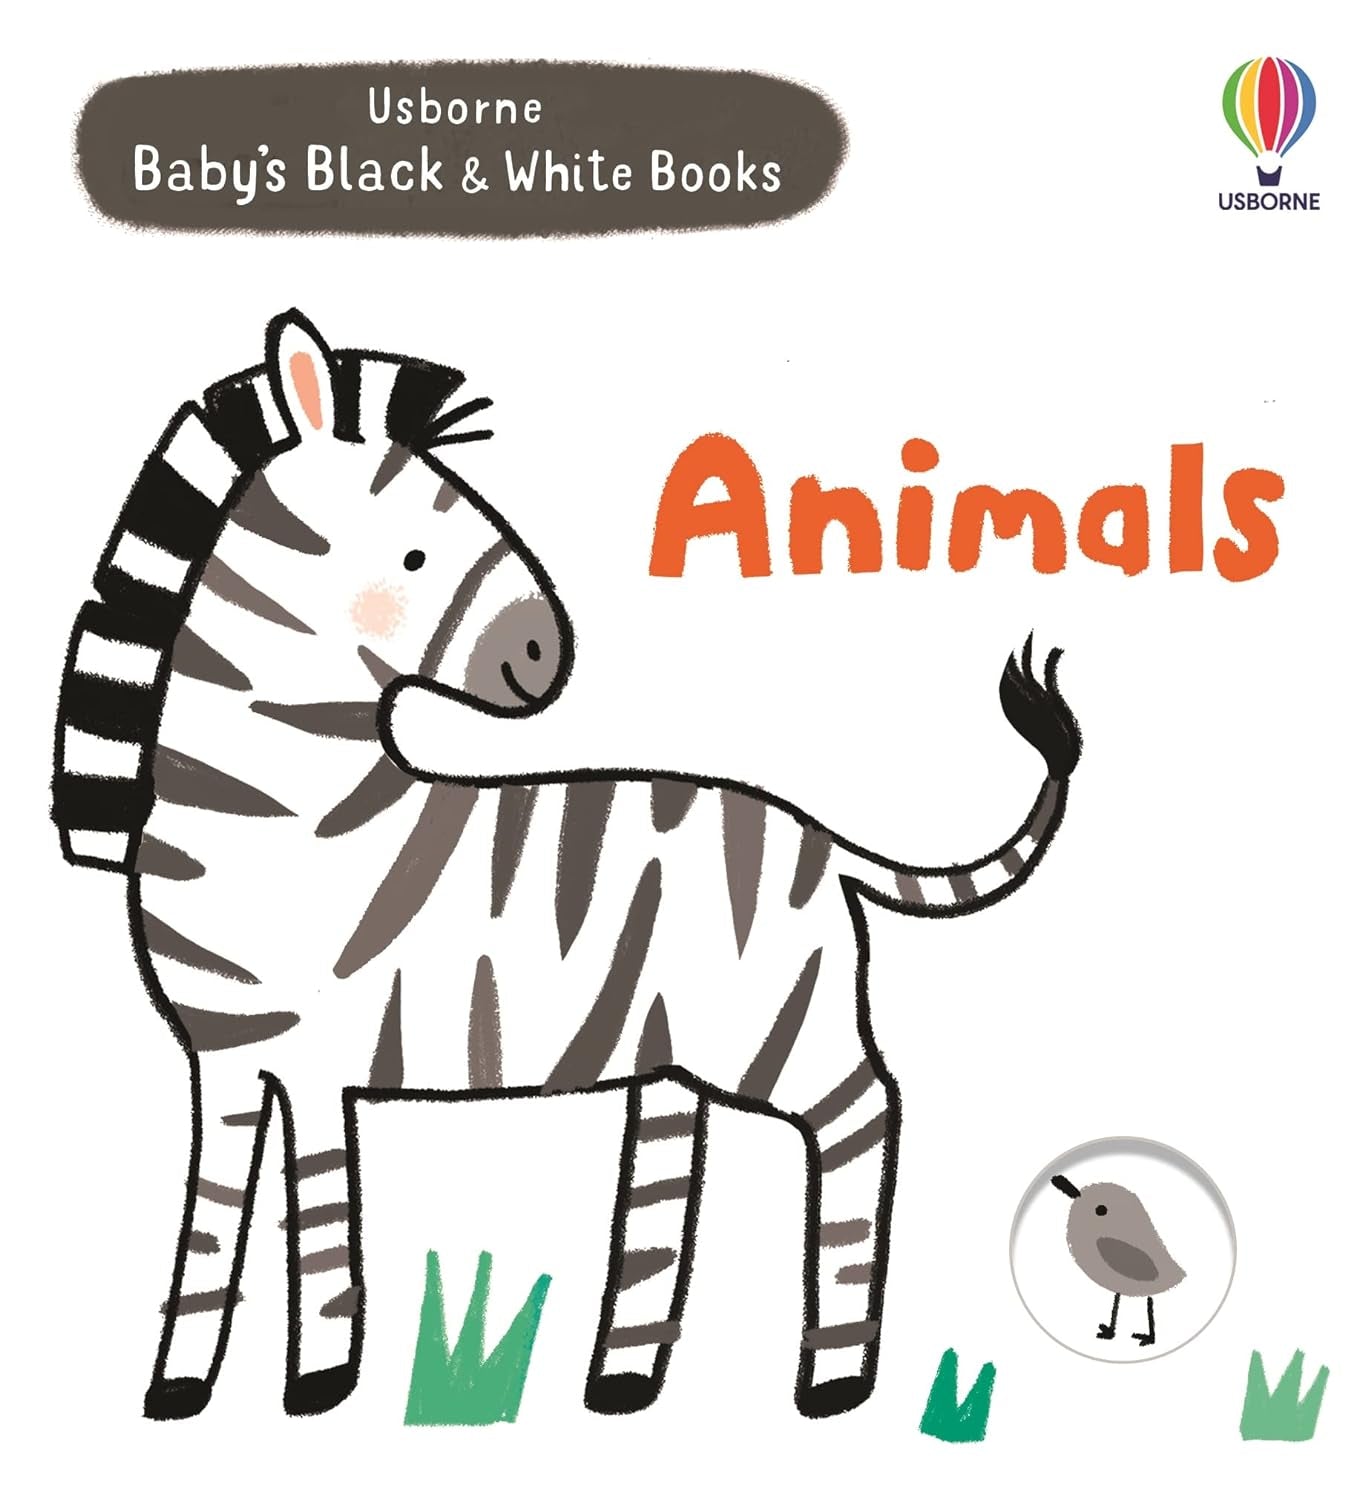 Usborne Baby’s Black & White Books